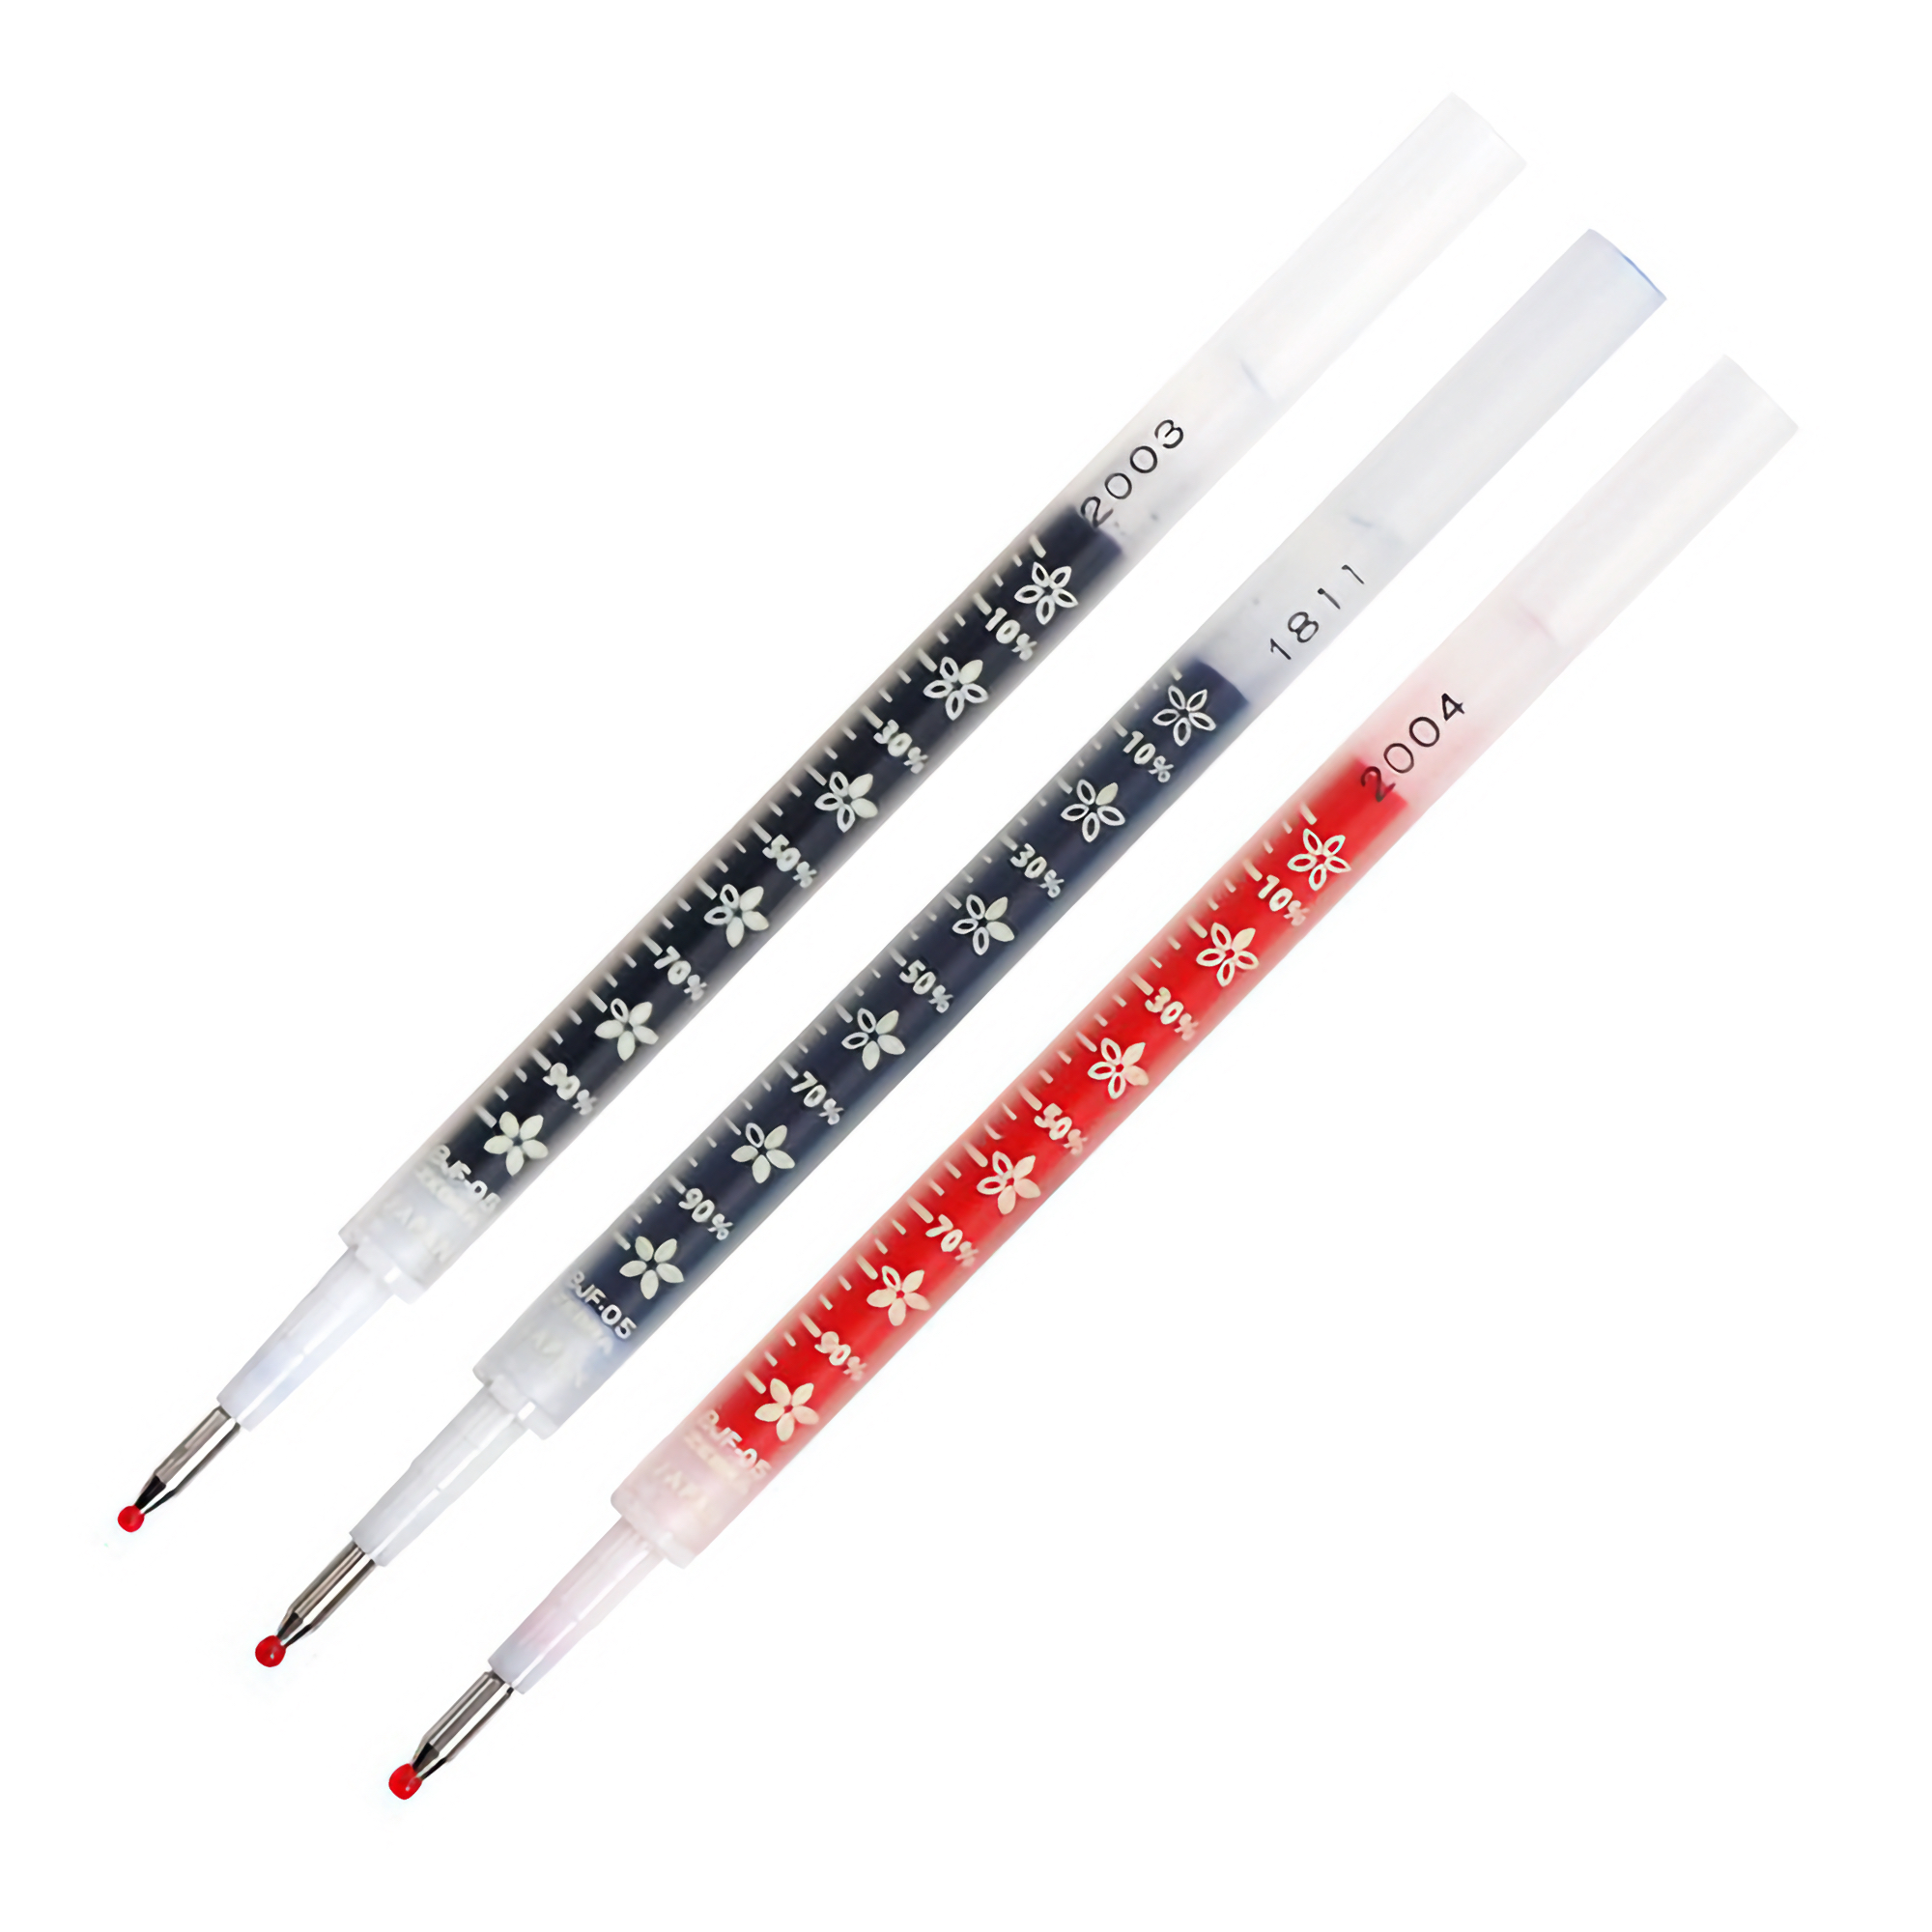 Zebra BJF-0.5 Sarasa Study Gel Pen Refill